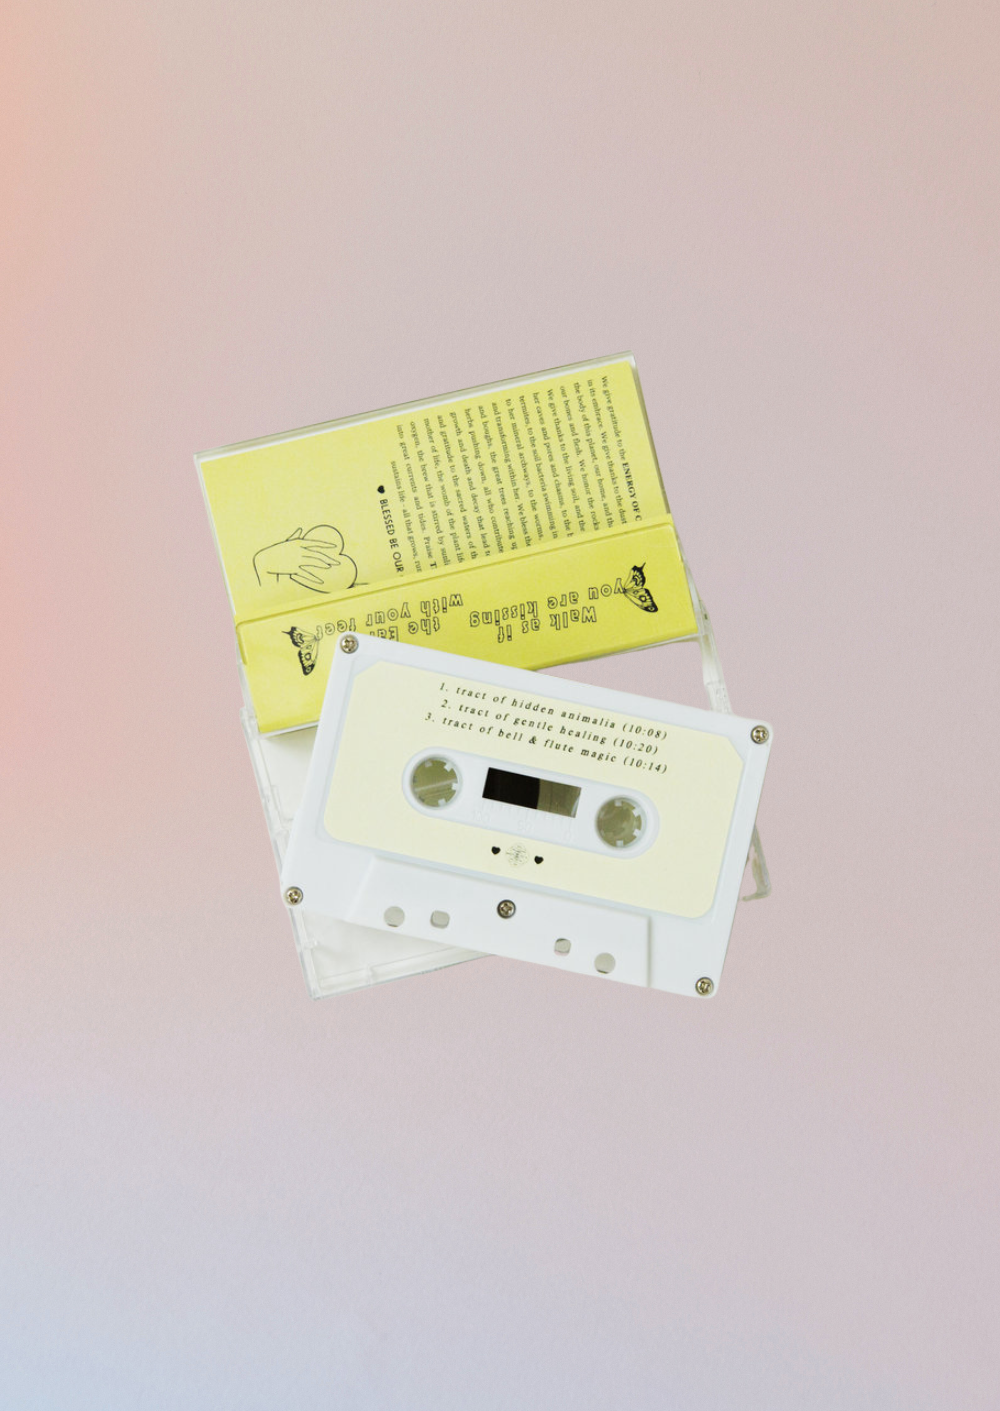 Matthewdavid’s Mindflight - Care Tracts - Cassette Tape